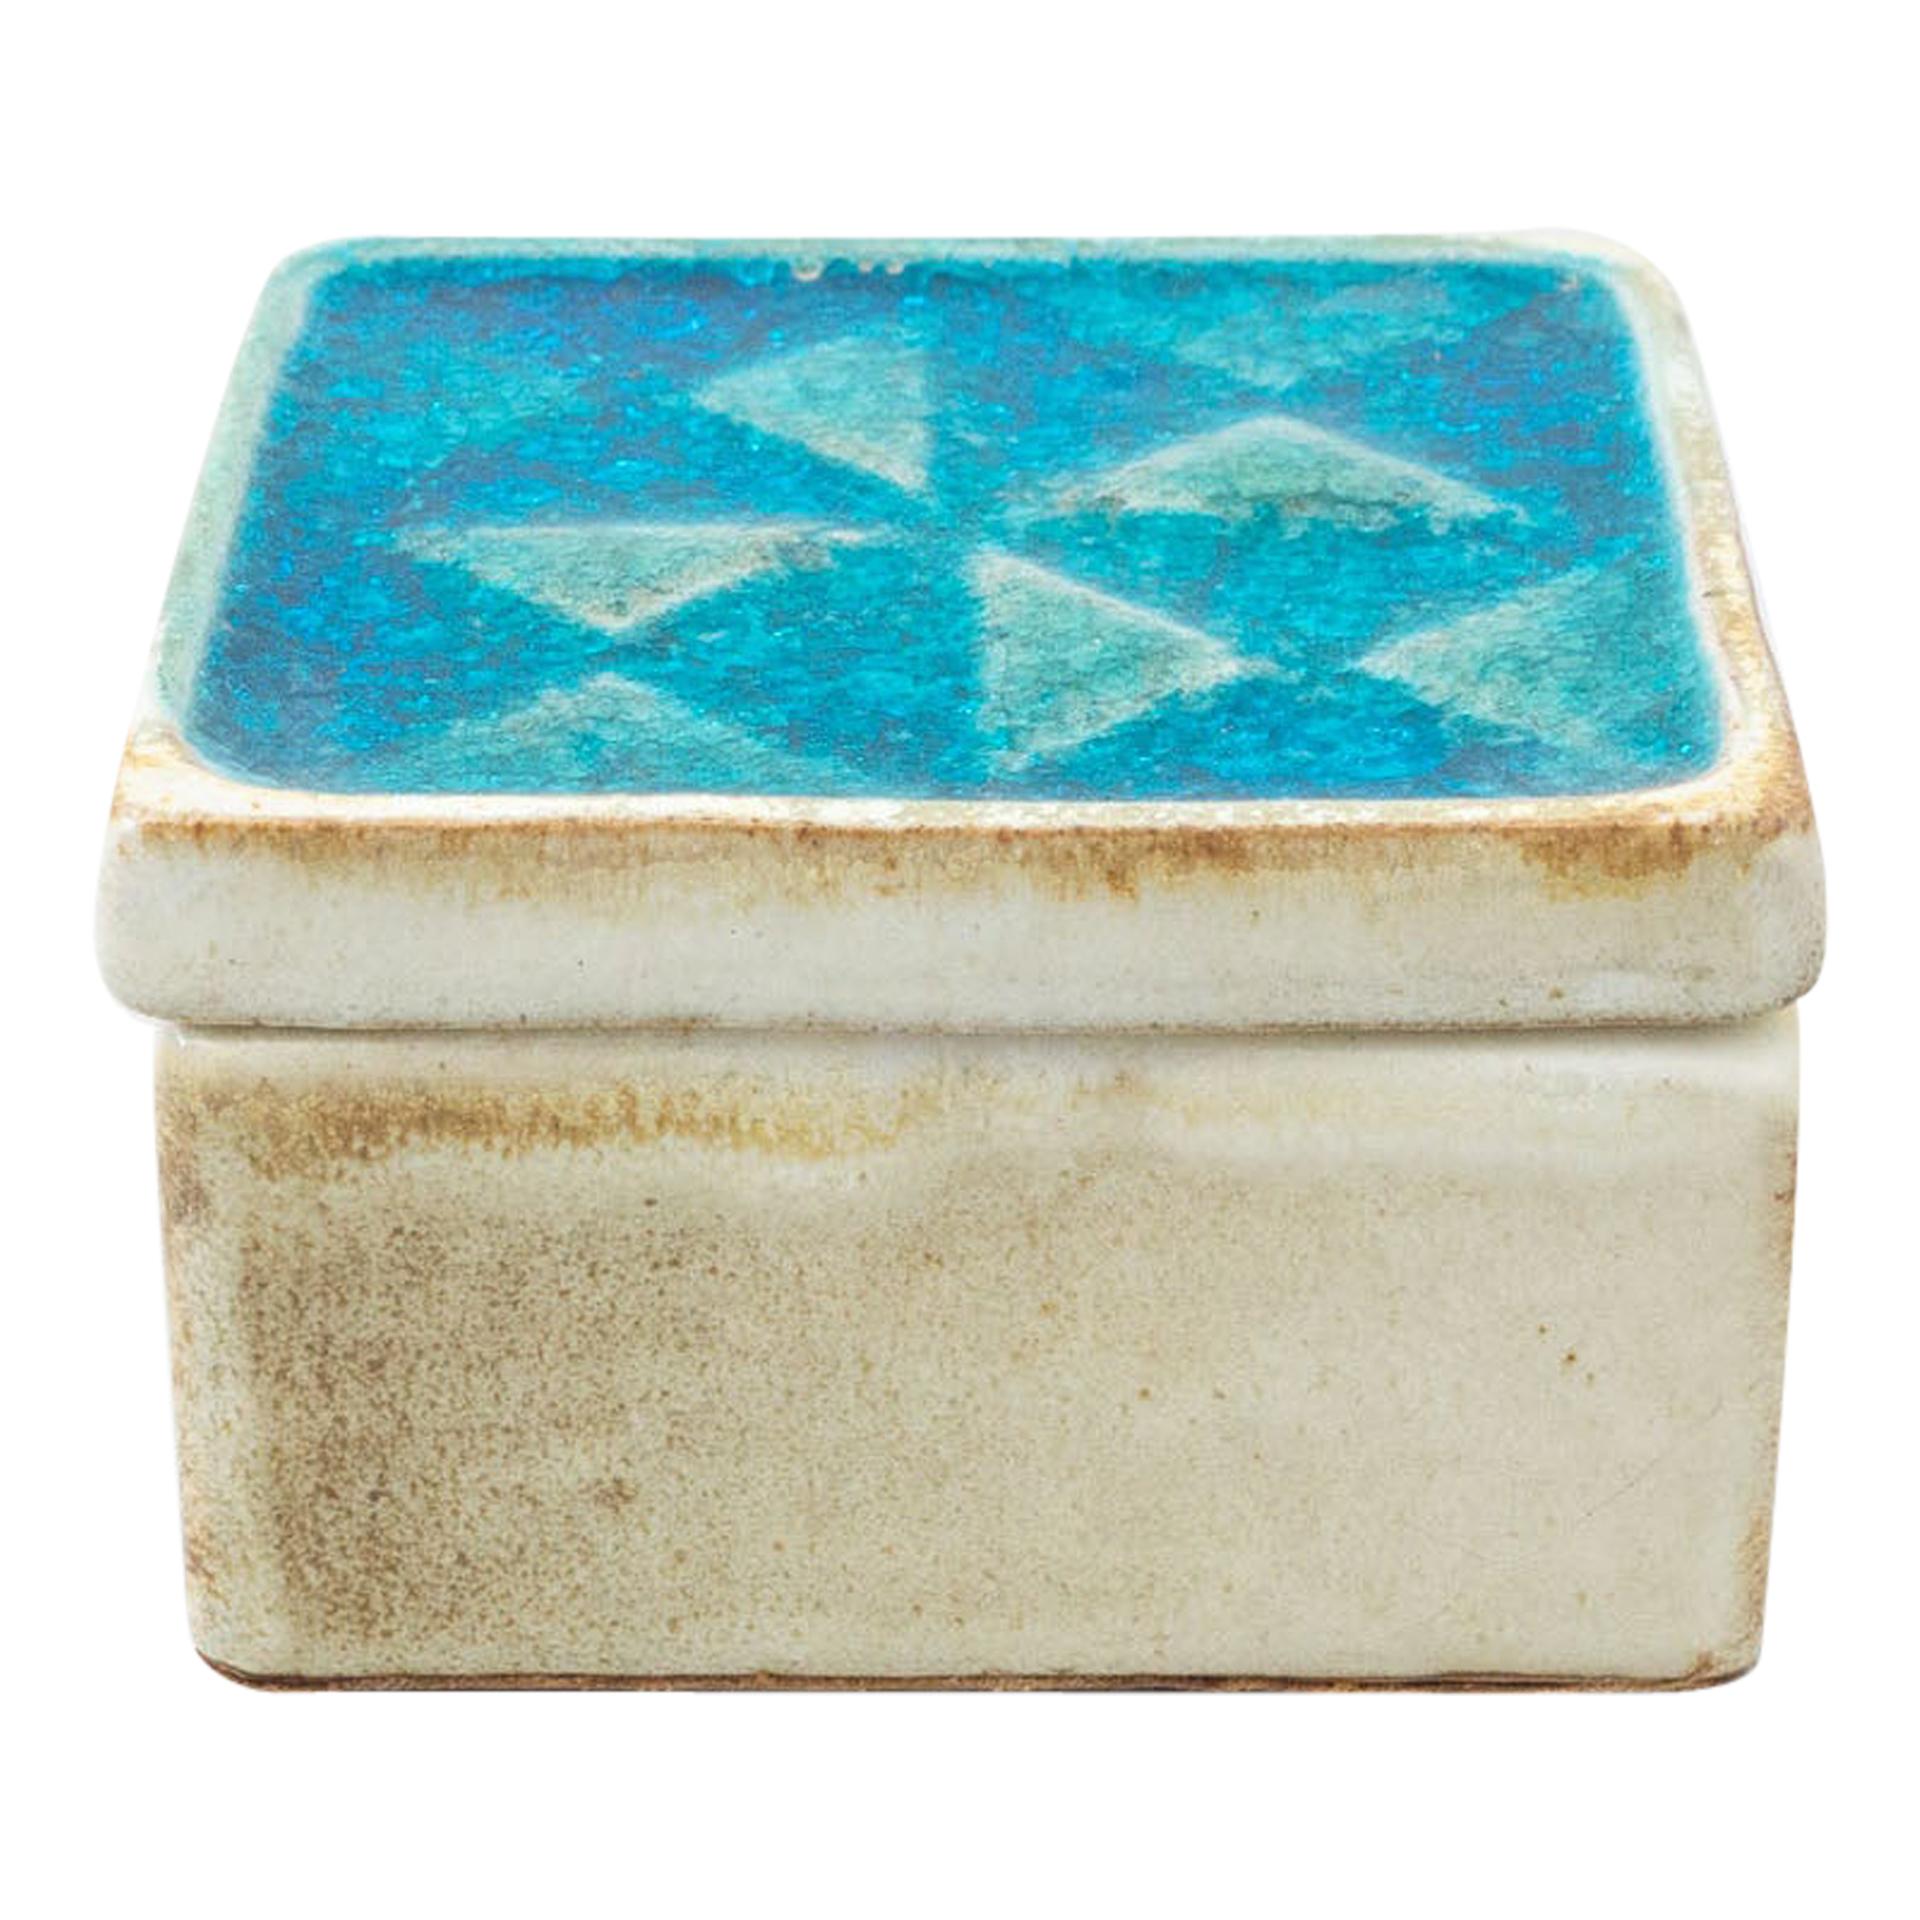 Vintage Blue Glazed Ceramic Box Handsigned by Cases, circa 1960